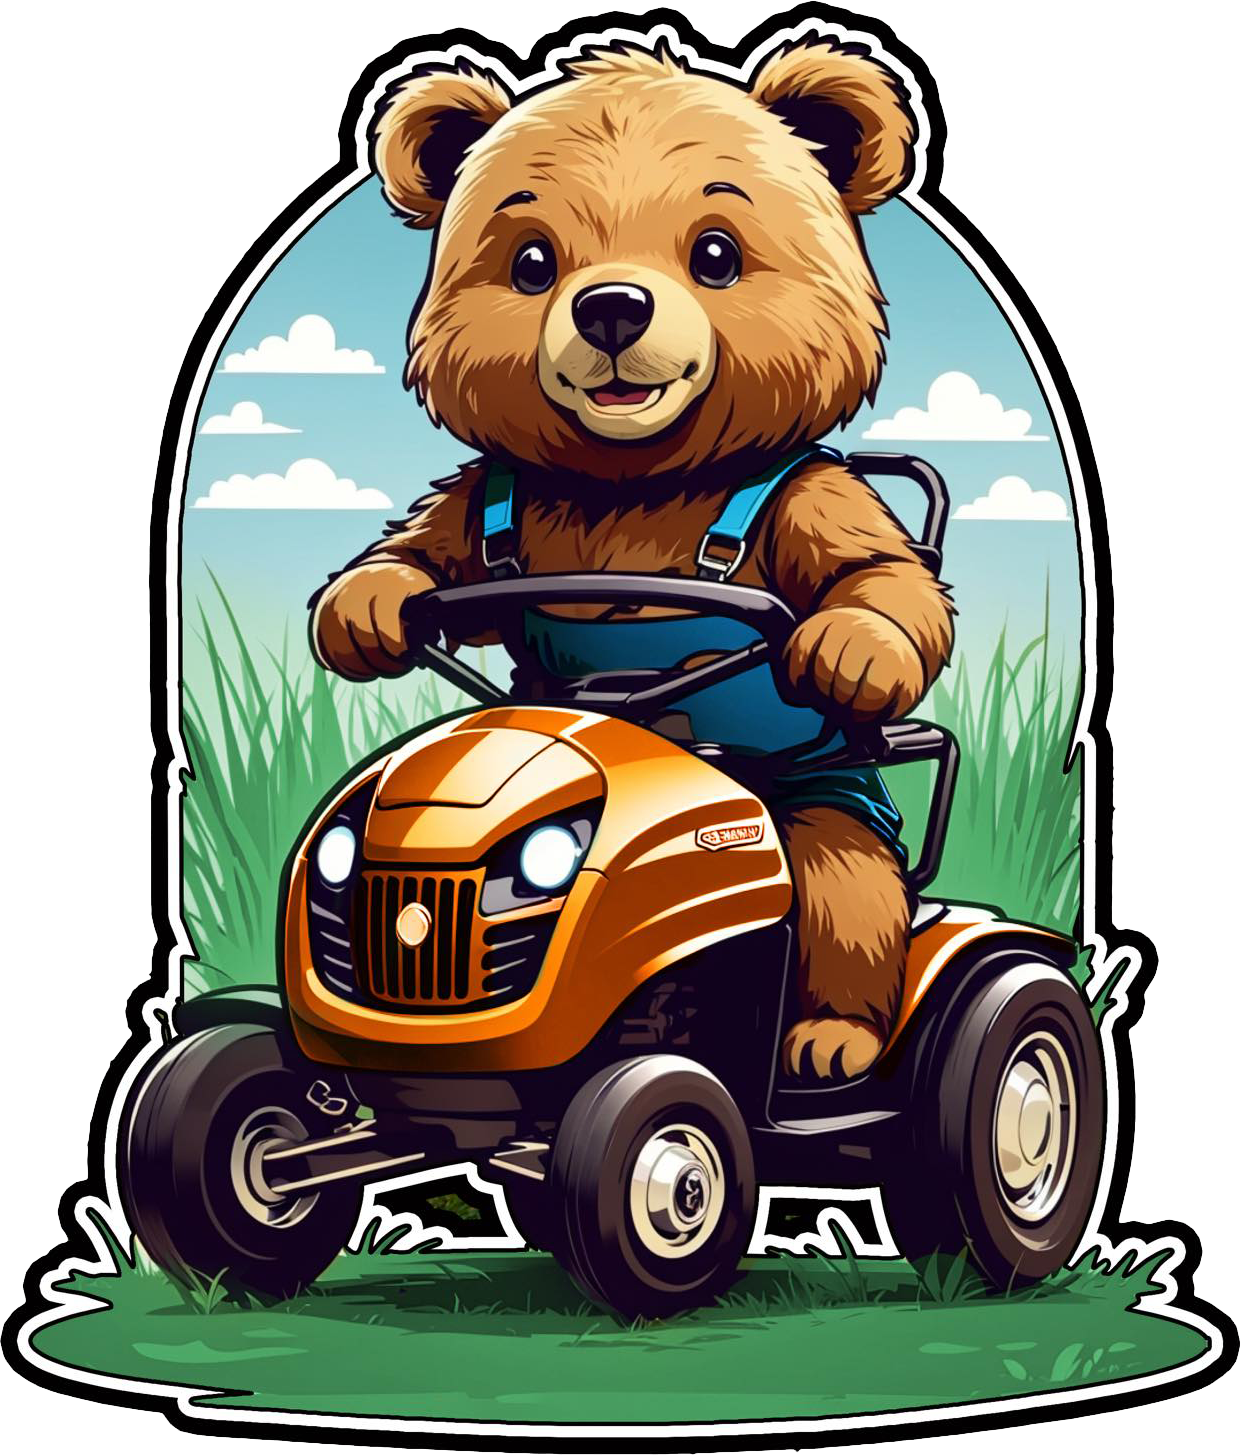 Bear Riding A Lawn Mower - Christiansburg, VA - Little Bear Lawn